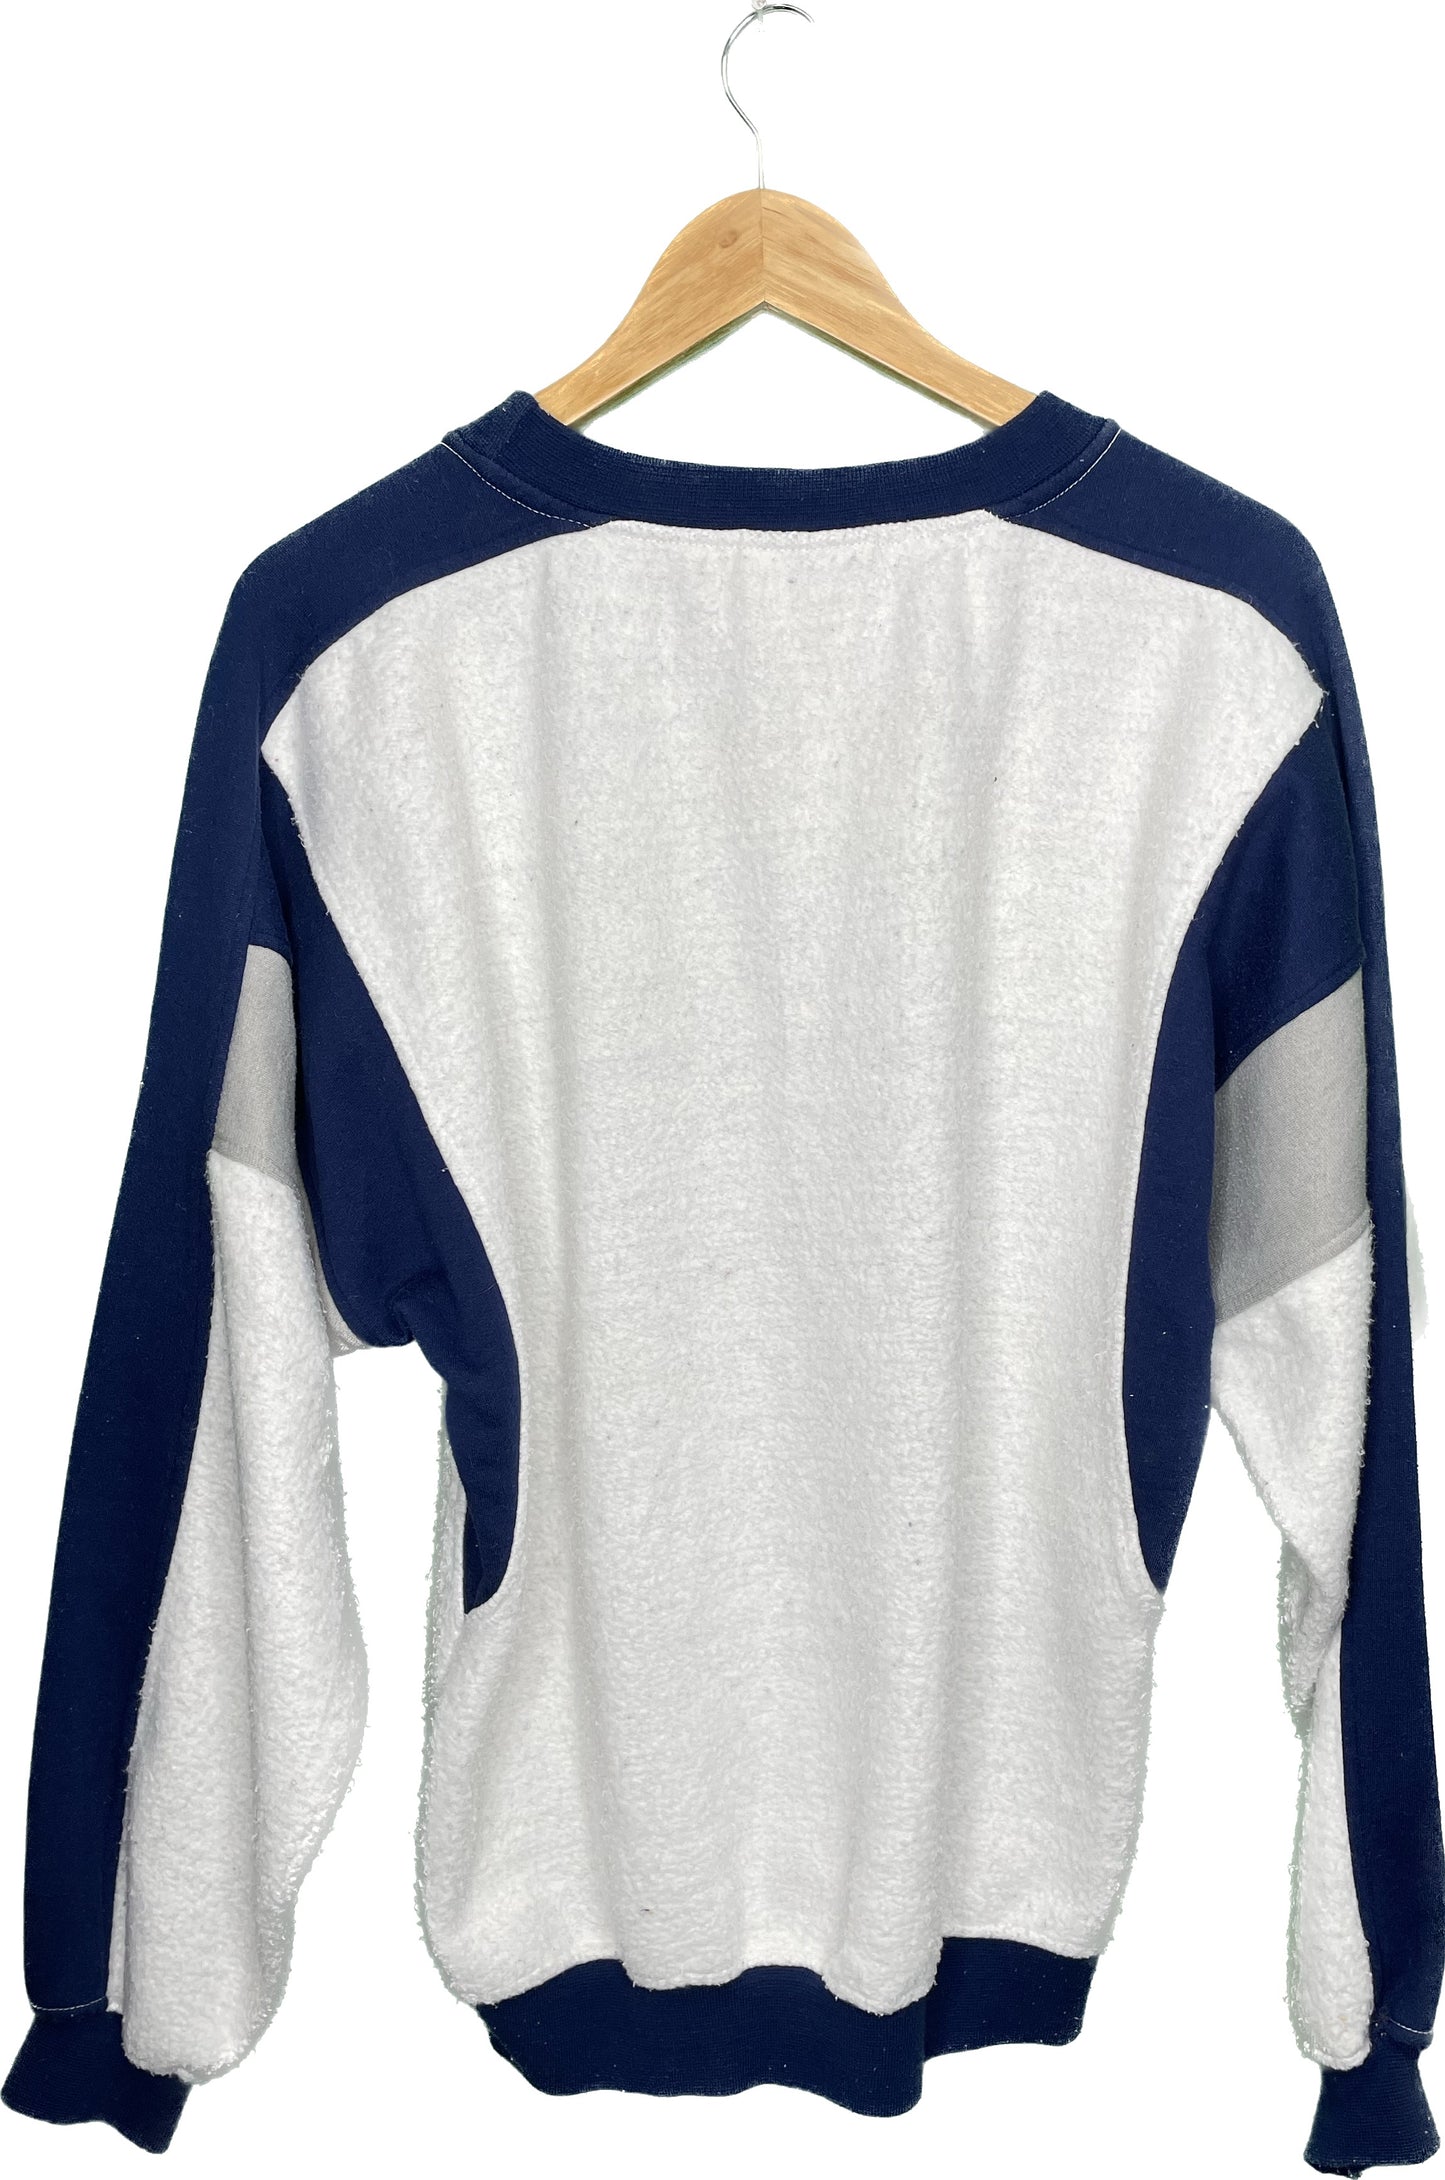 Vintage XL Brown University Crewneck Sweatshirt